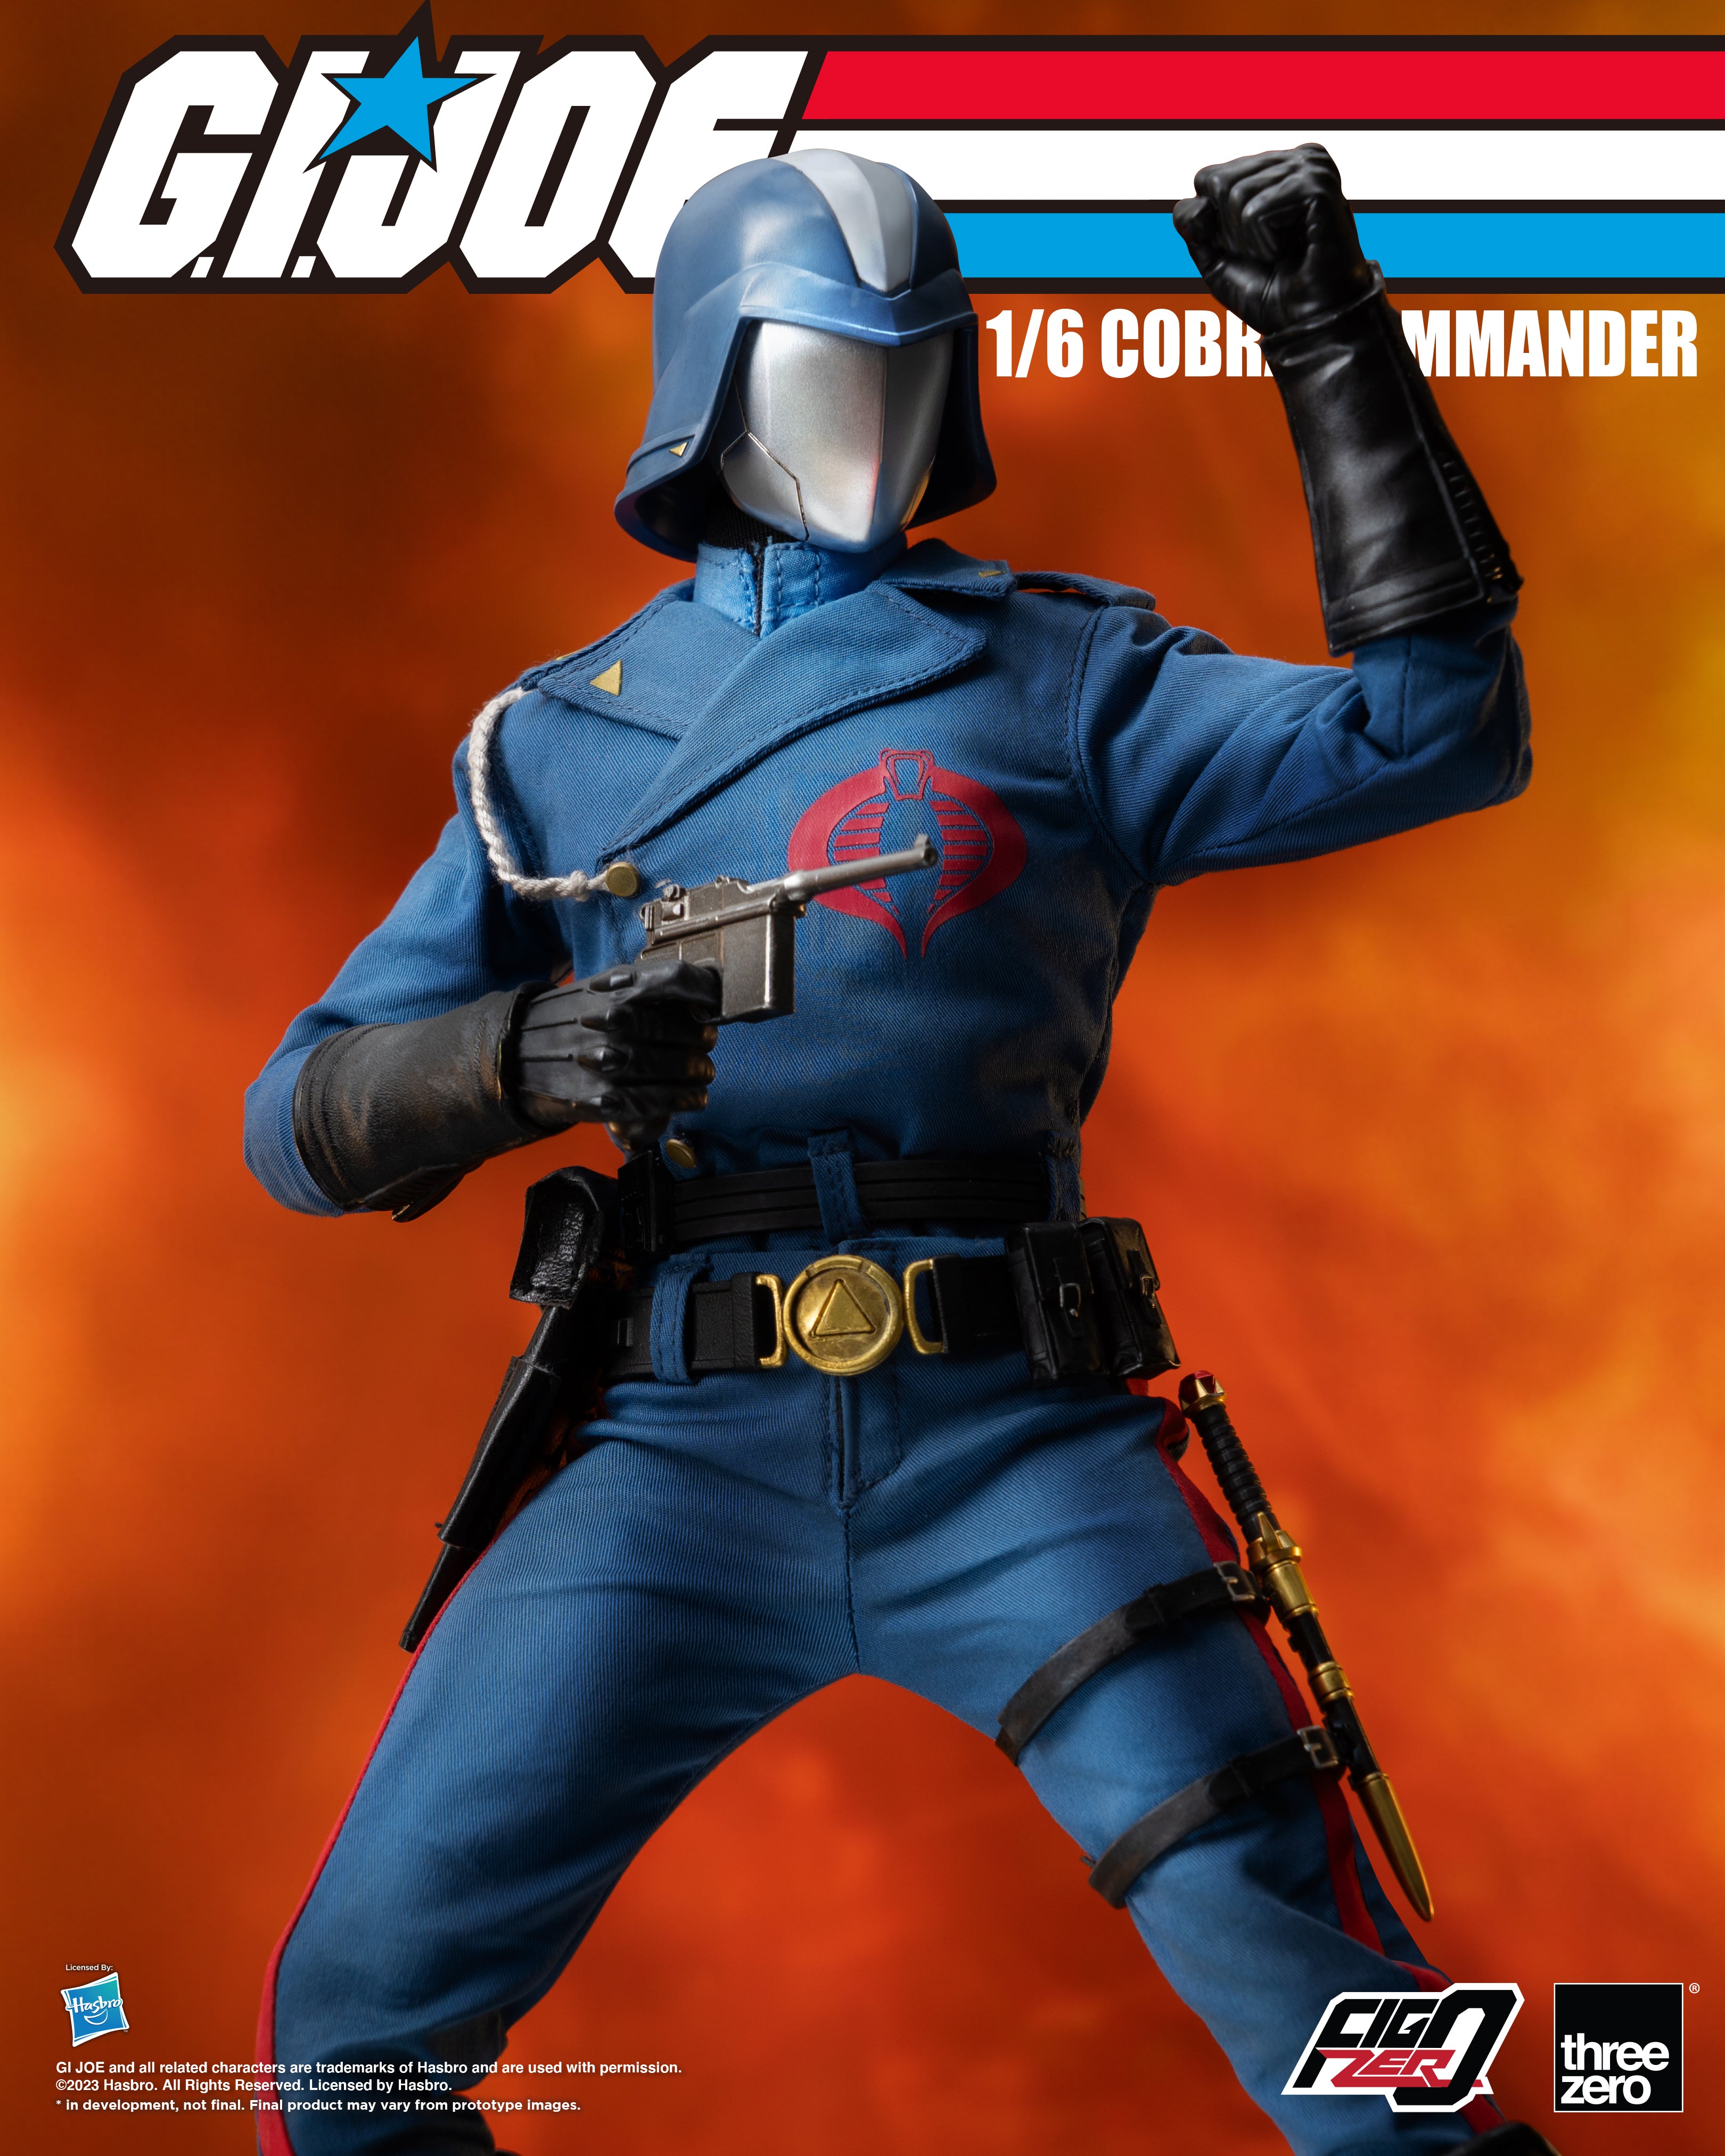 G.I Joe: Cobra Commander: ThreeZero